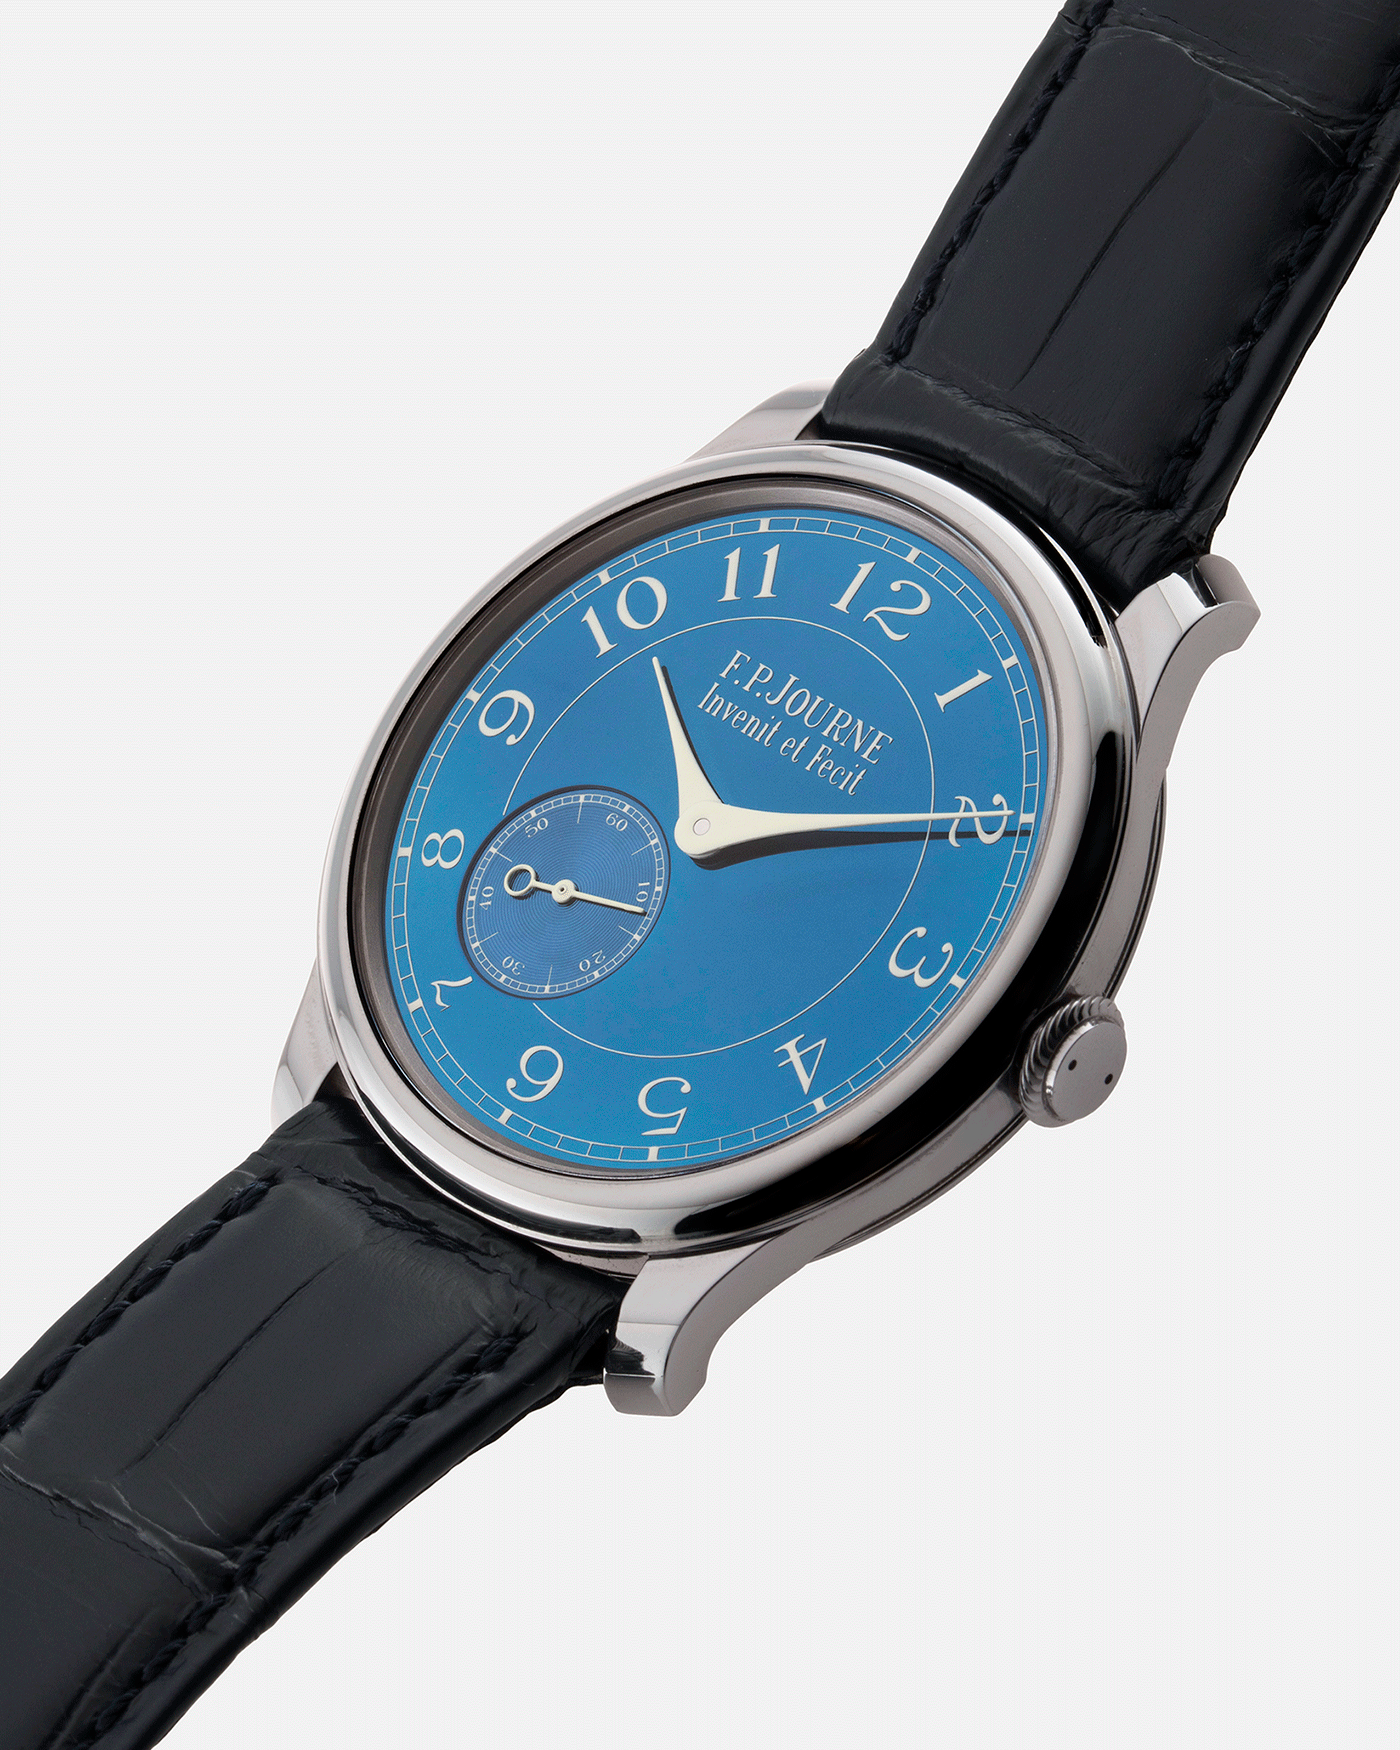 Brand: F.P. Journe Year: 2019 Model: Chronometre Bleu Material: Tantalum Movement: in-house FPJ calibre 1304 Case Diameter: 39mm Bracelet/Strap: F.P. Journe Blue Alligator and Tantalum Tang Buckle